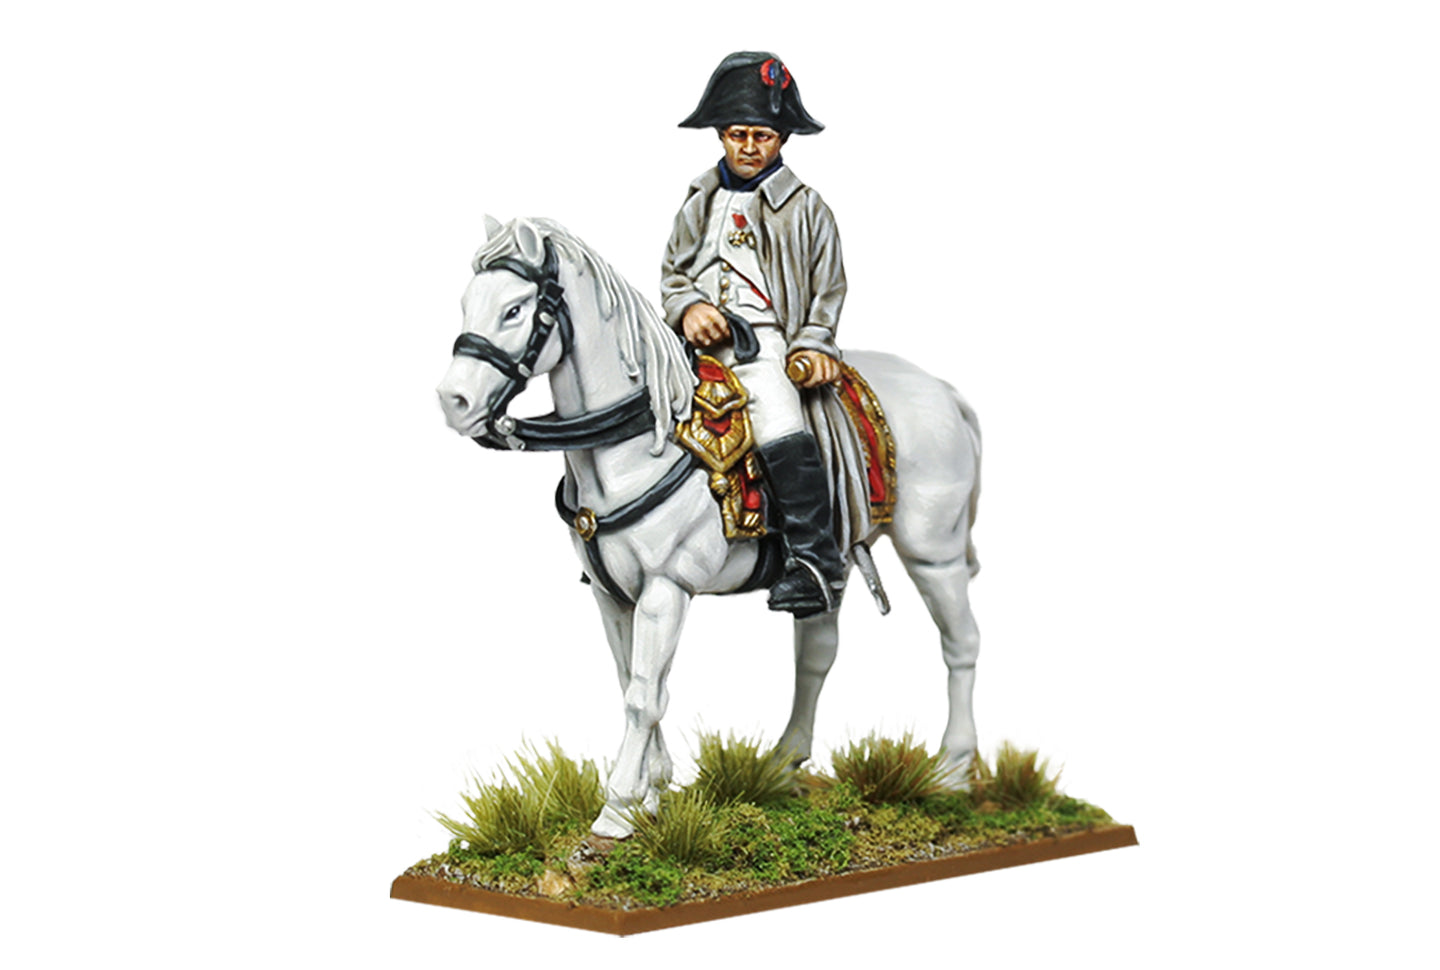 Emperor Napoleon on horseback